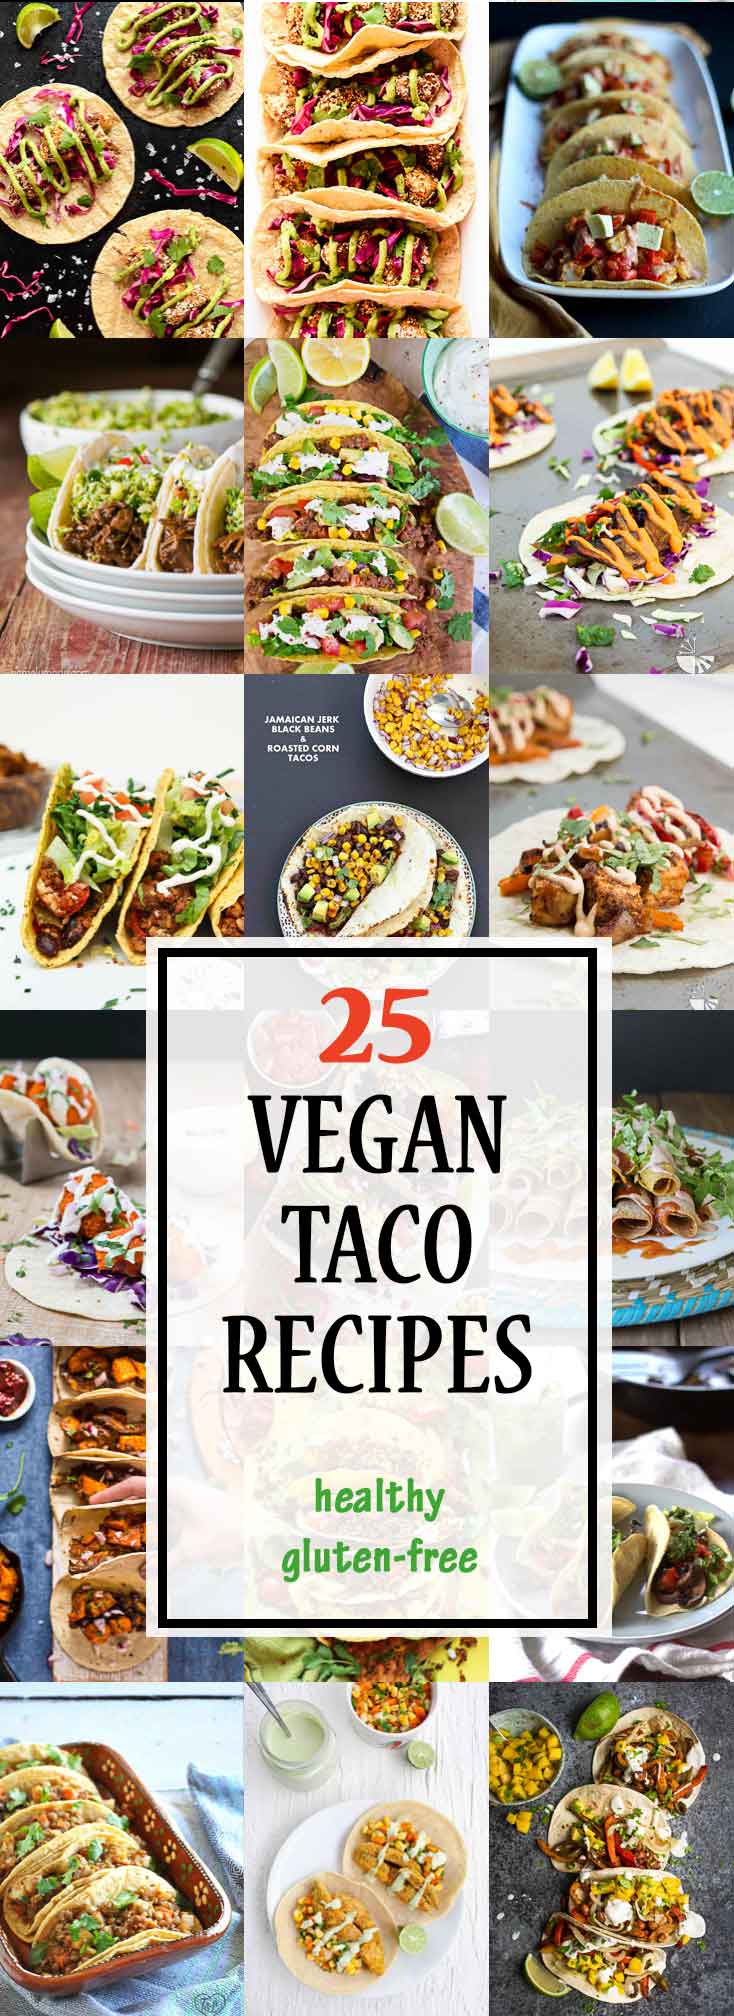 25 Mouthwatering Vegan Taco Recipes #vegan #glutenfree | Vegetarian Gastronomy www.VegetarianGastronomy.com